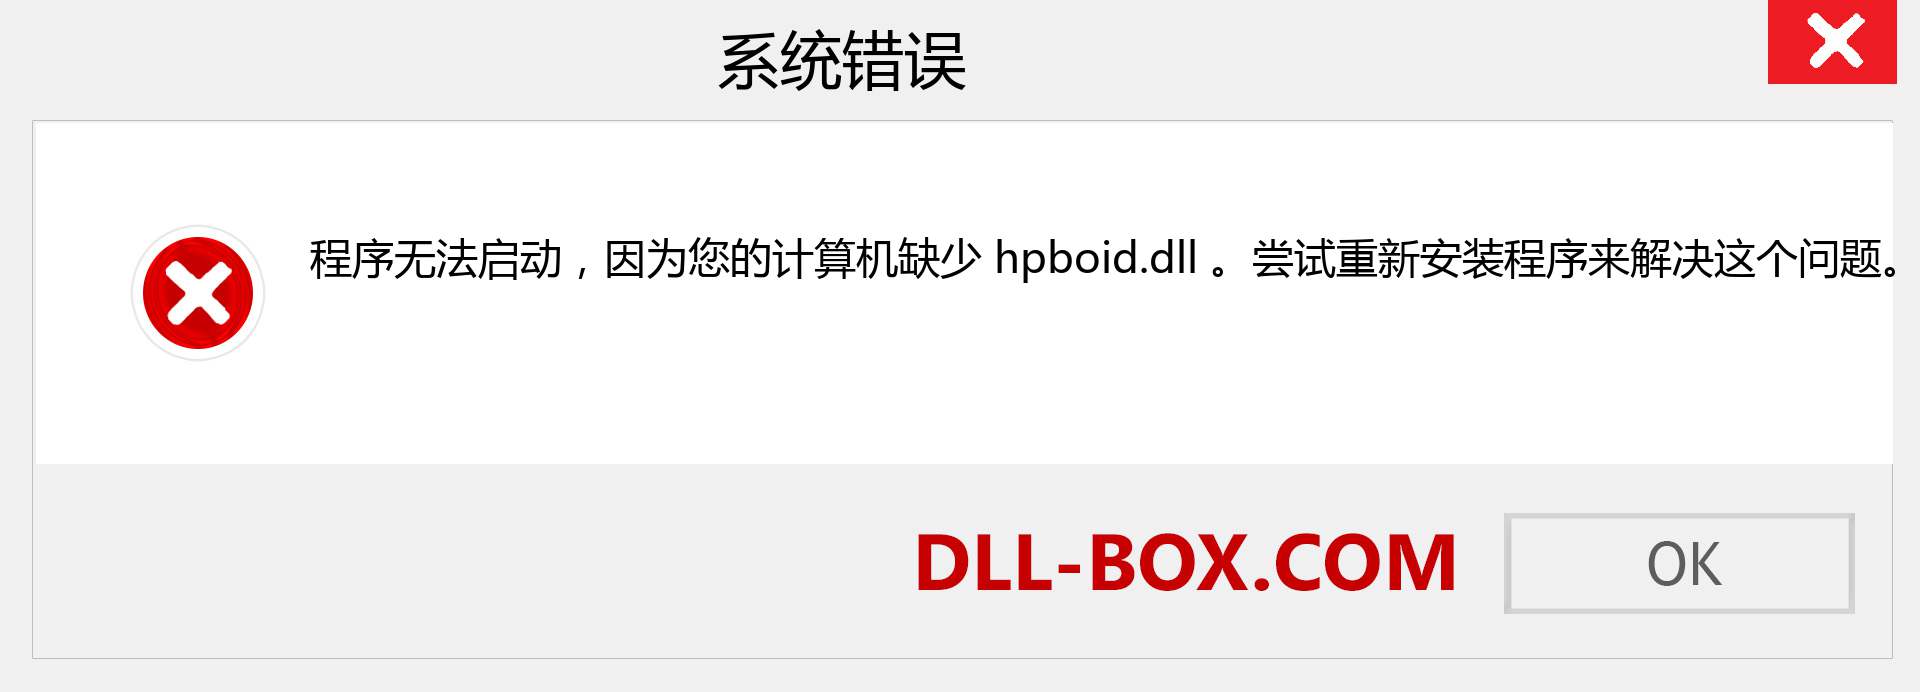 hpboid.dll 文件丢失？。 适用于 Windows 7、8、10 的下载 - 修复 Windows、照片、图像上的 hpboid dll 丢失错误